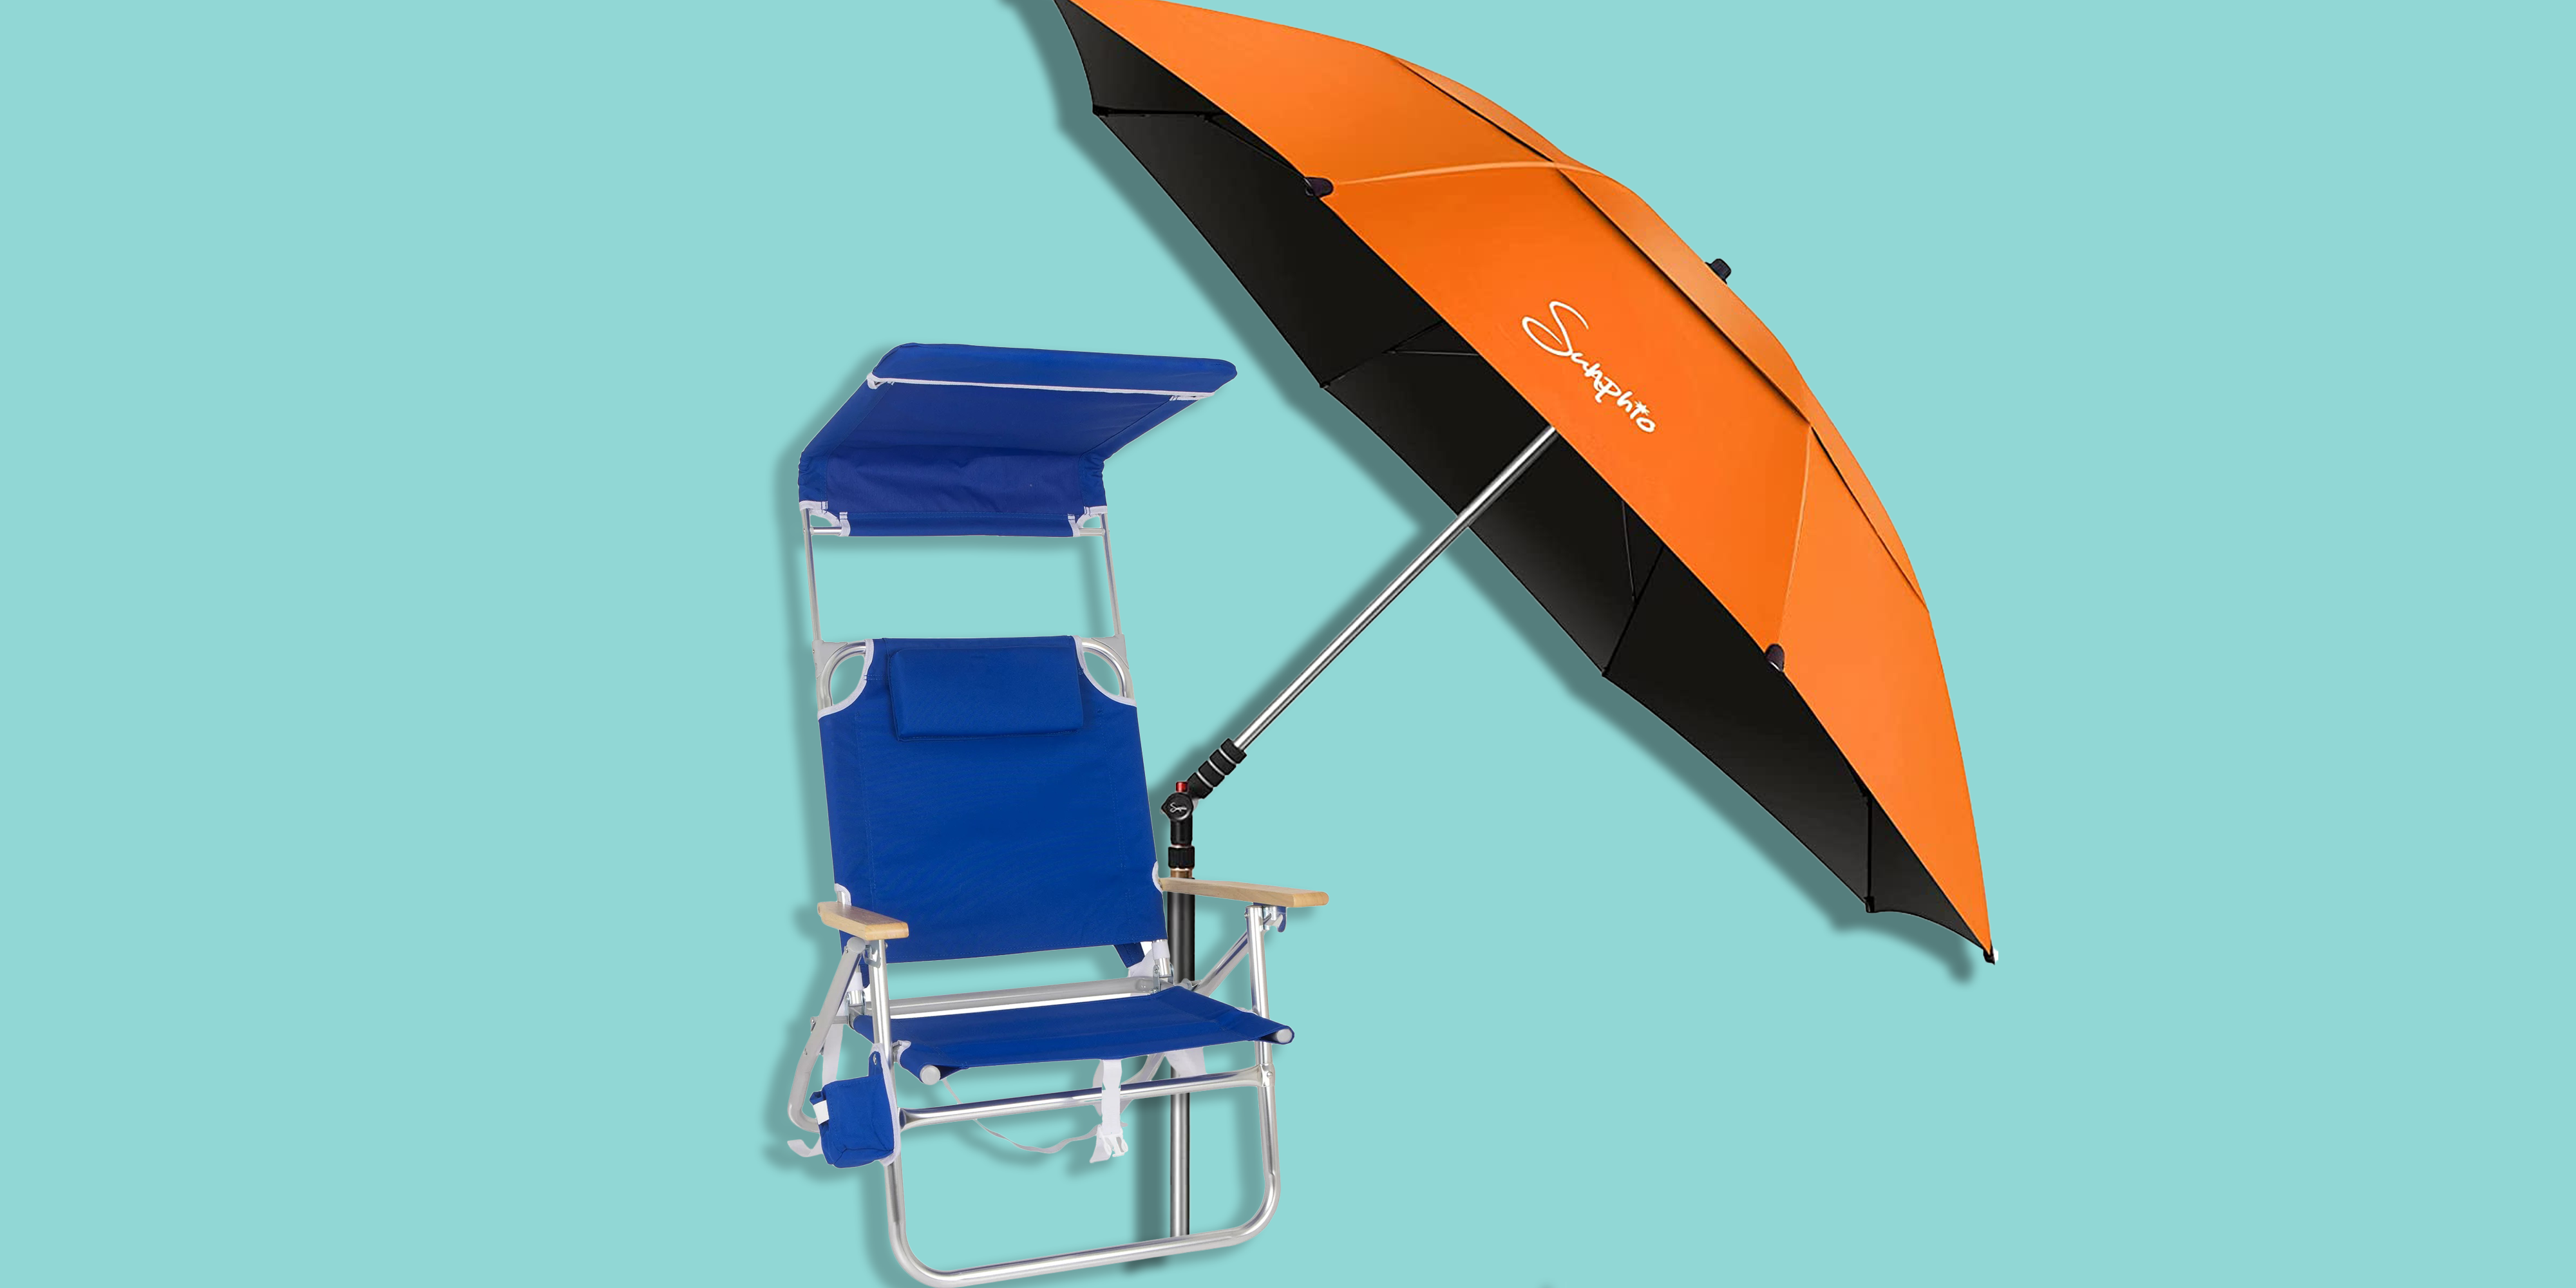 Beach Umbrellas Provide Little to No Sun Protection, Says Study